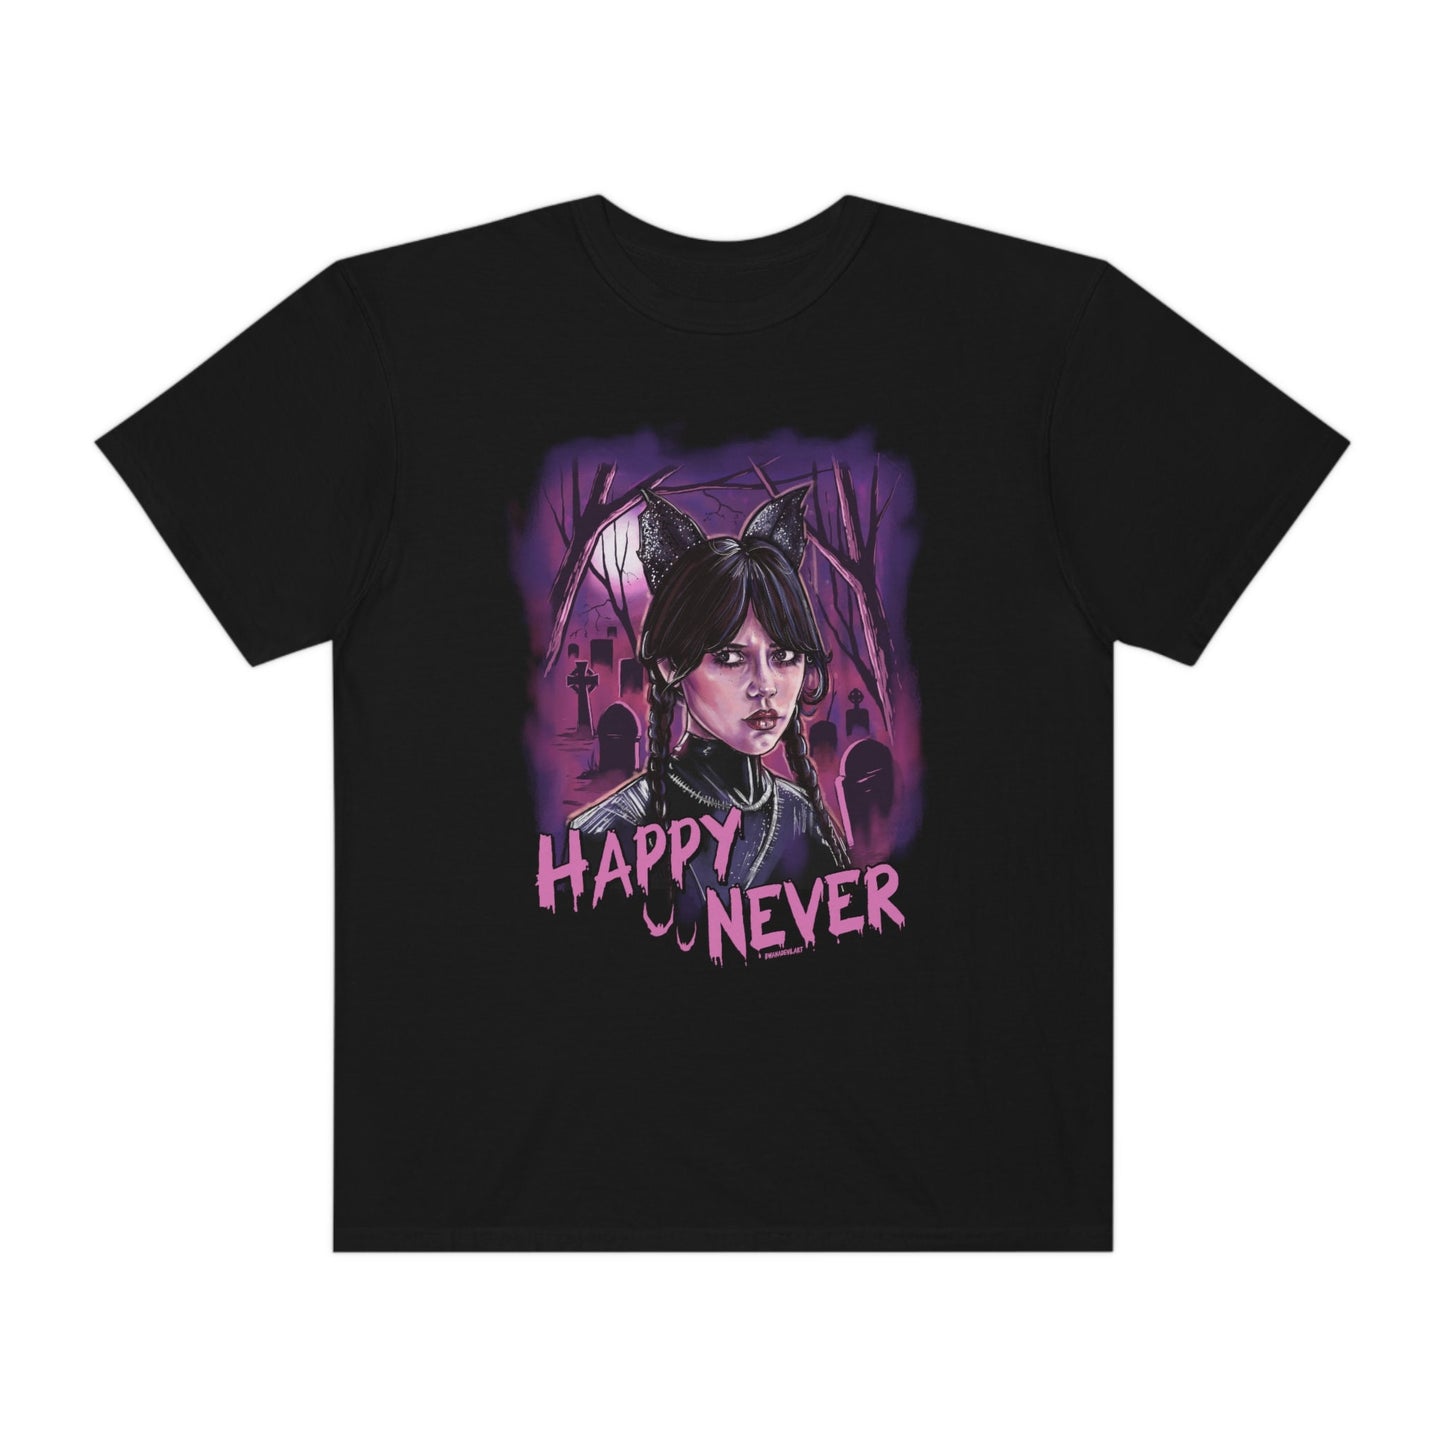 Wednesday Addams Shirt, Wednesday Shirt, Nevermore Academy shirt, Addams Family shirt, Wednesday Addams merch